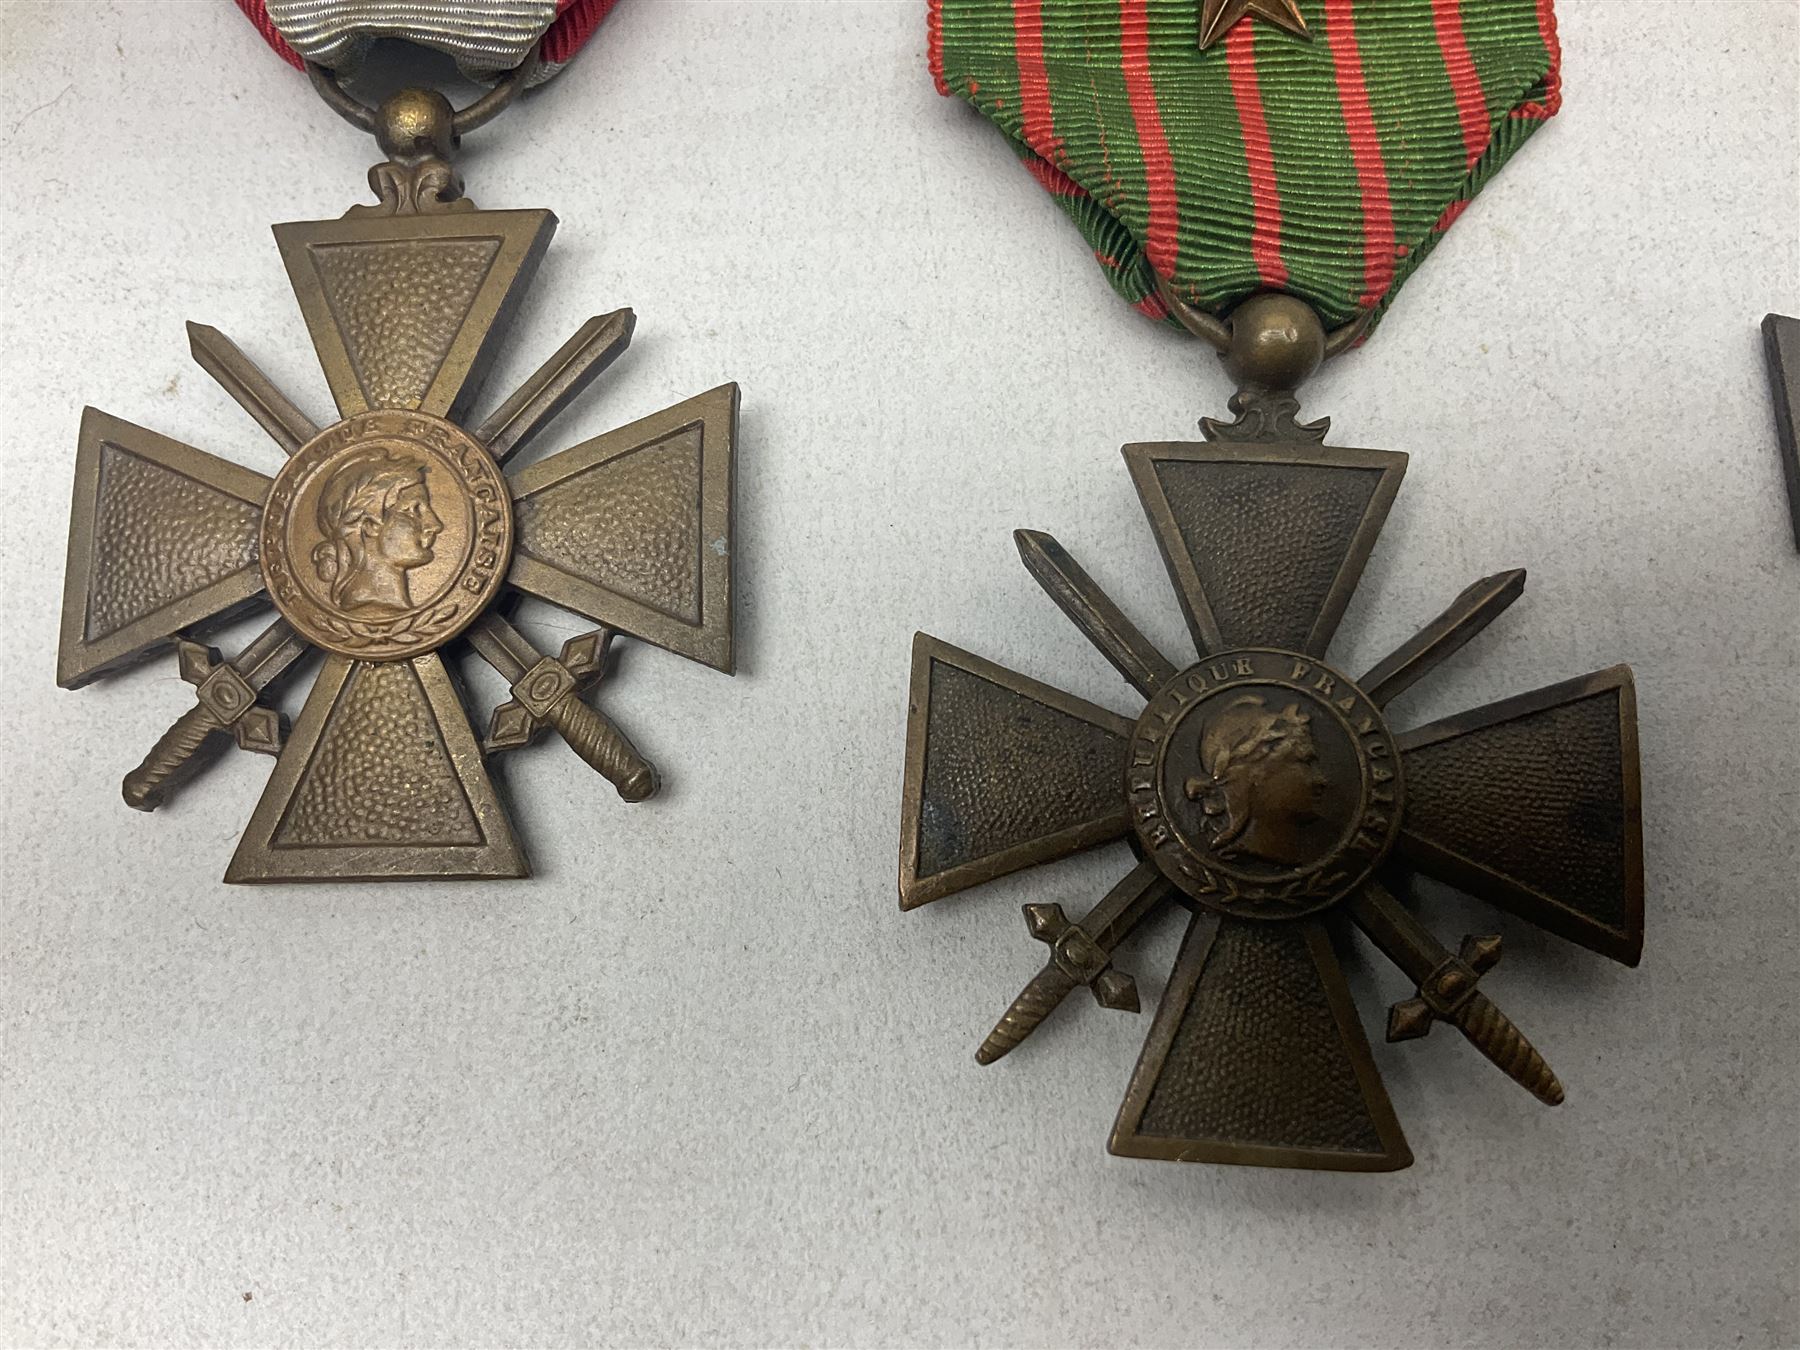 Six French medals - 2nd Empire Louis-Naploeon Medaille Militaire Valeur Et Discipline; 1870 3rd Repu - Image 3 of 10